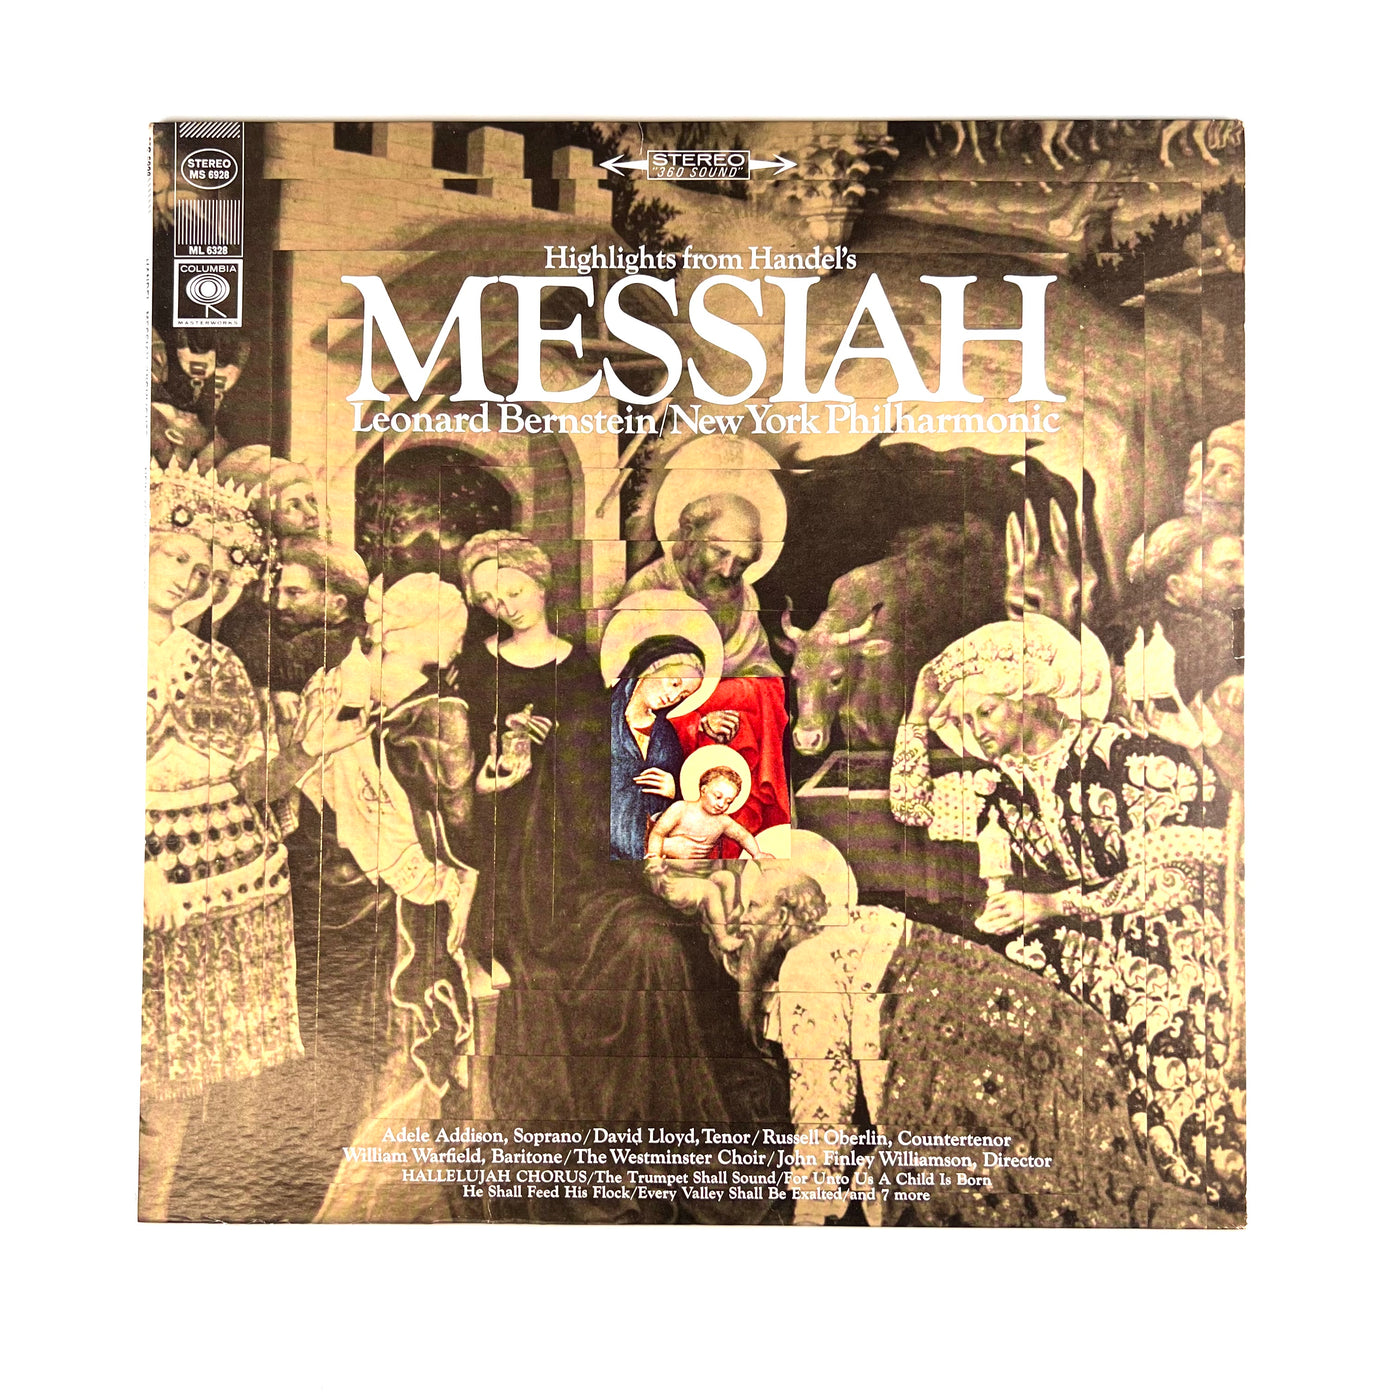 Leonard Bernstein / The New York Philharmonic Orchestra - Highlights From Handel's Messiah